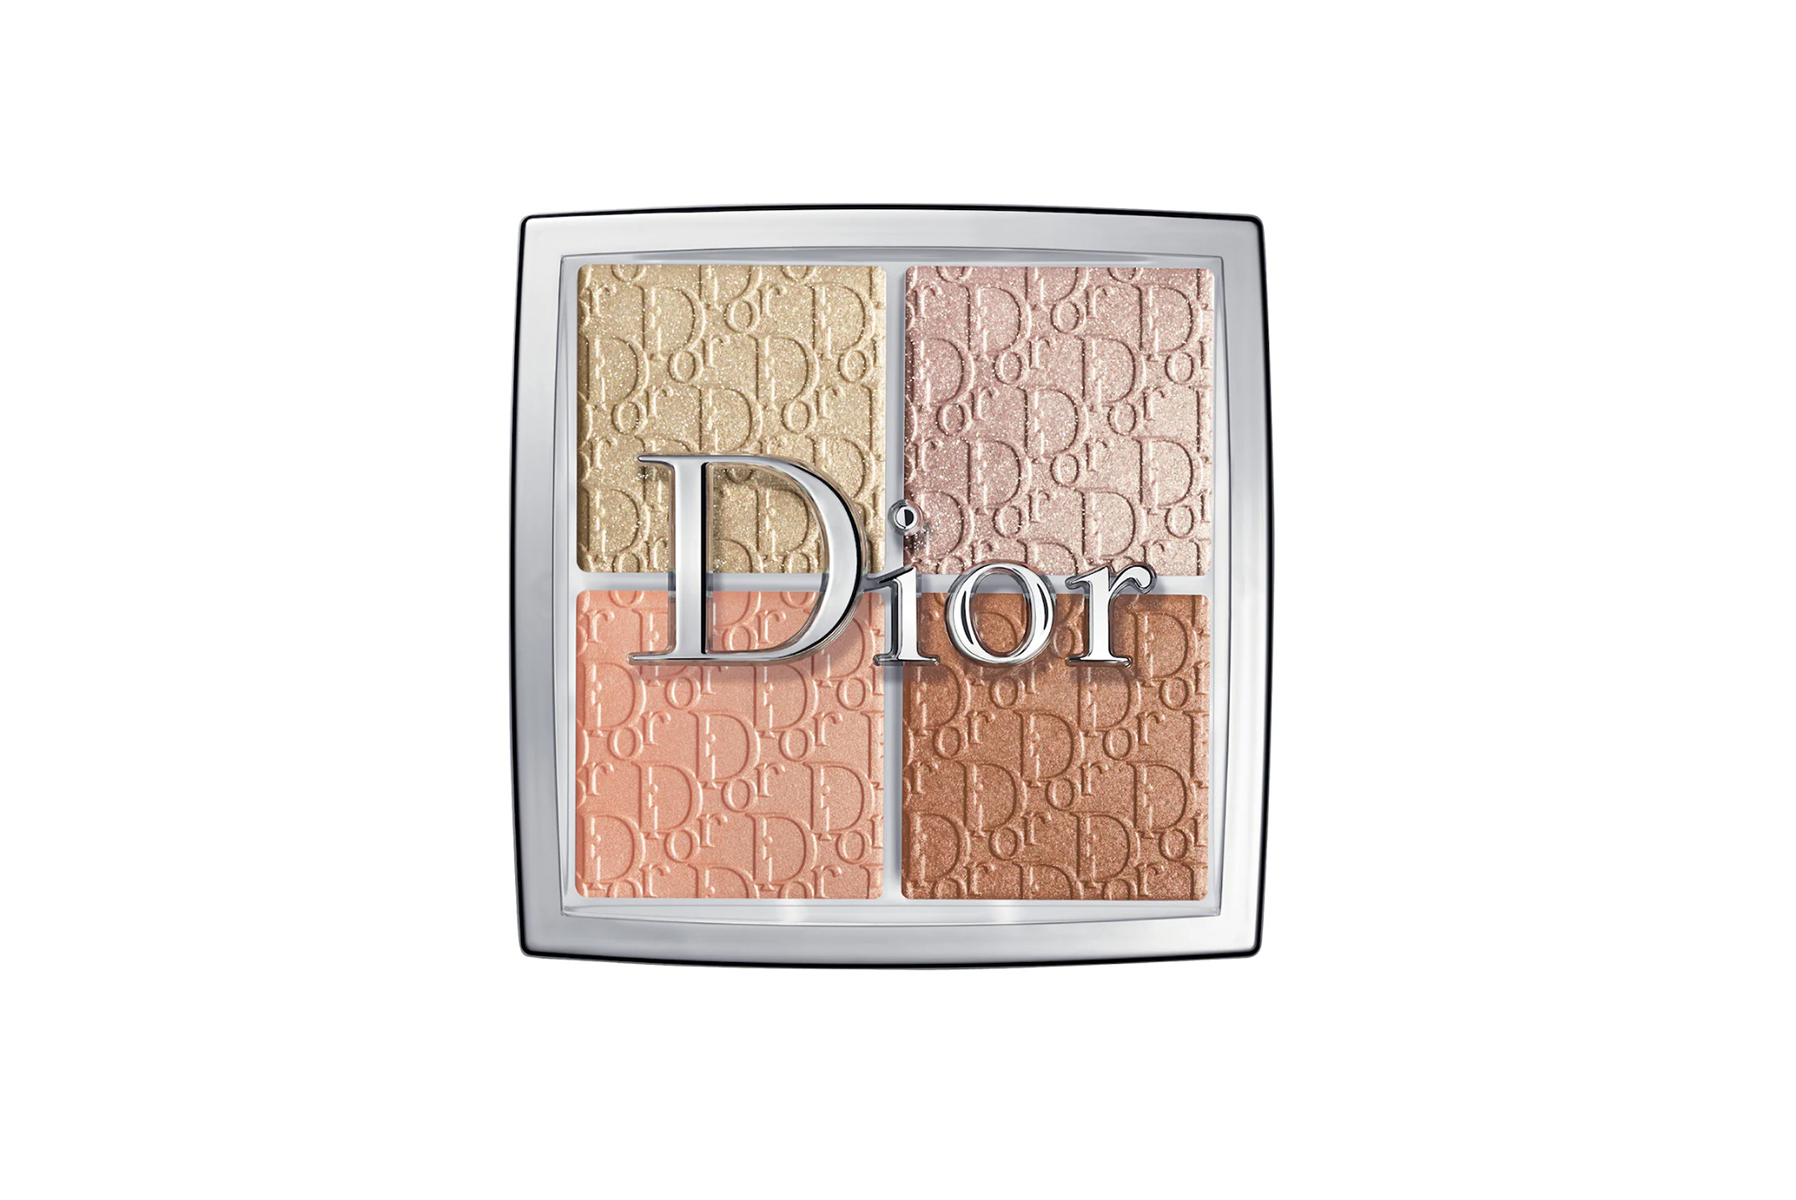 Dior Backstage Glow Face Palette